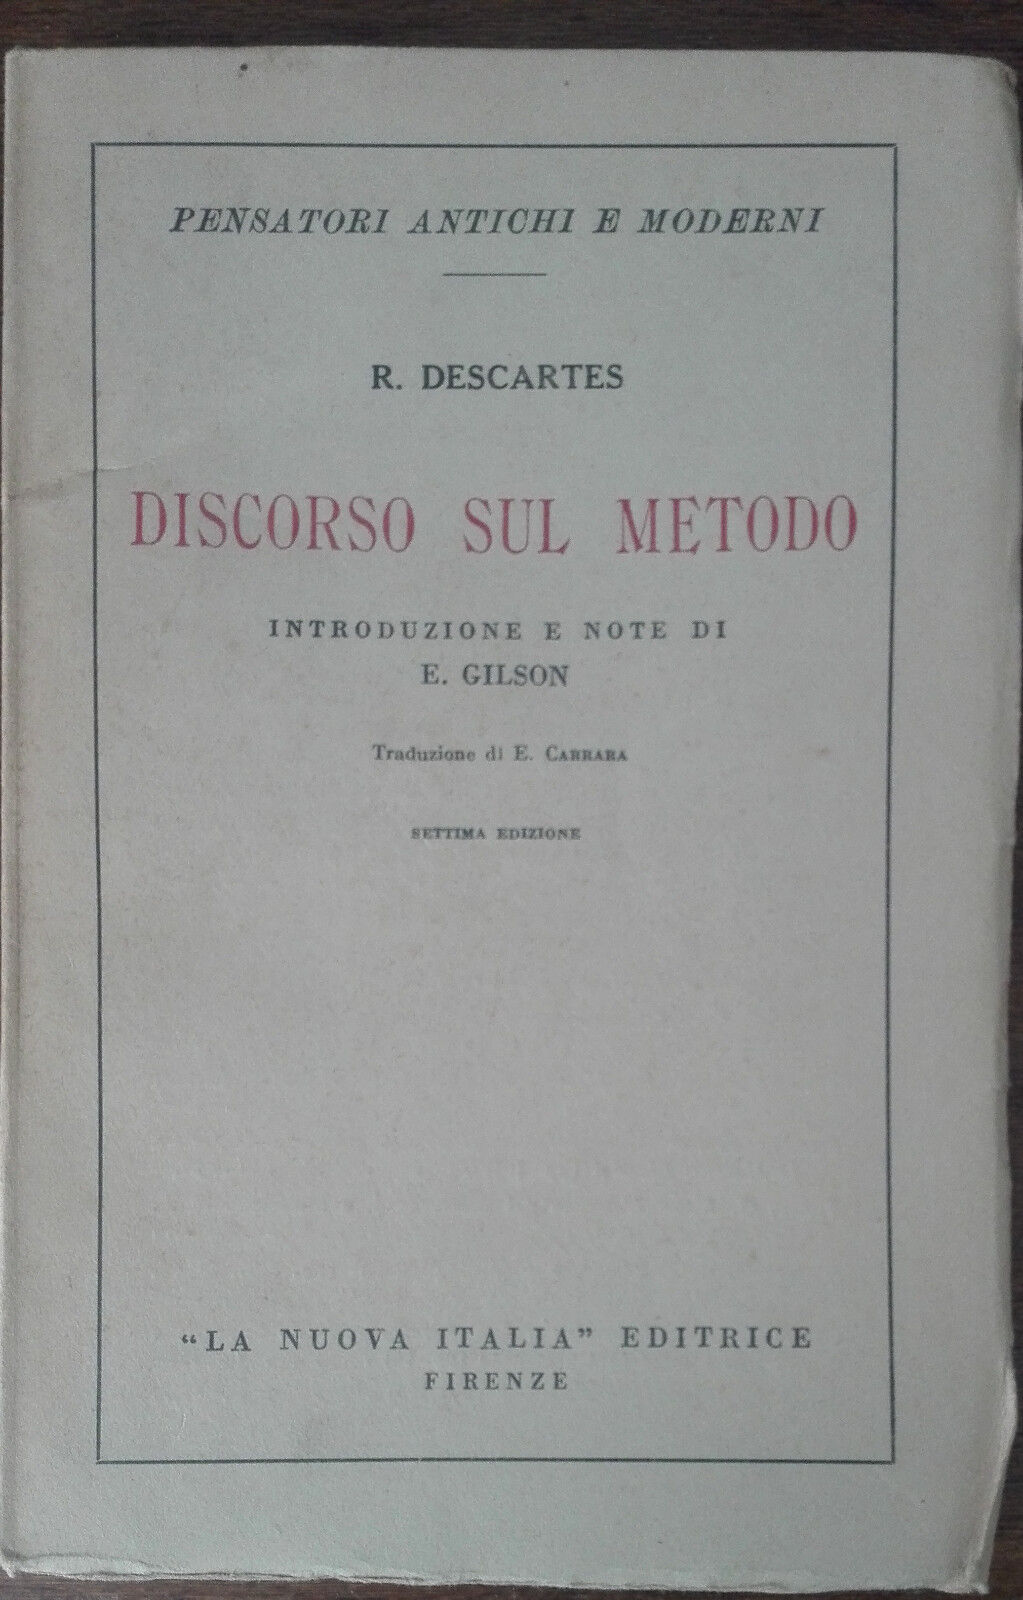 Discorso sul metodo - Ren? Descartes - La nuova Italia,1945 - A